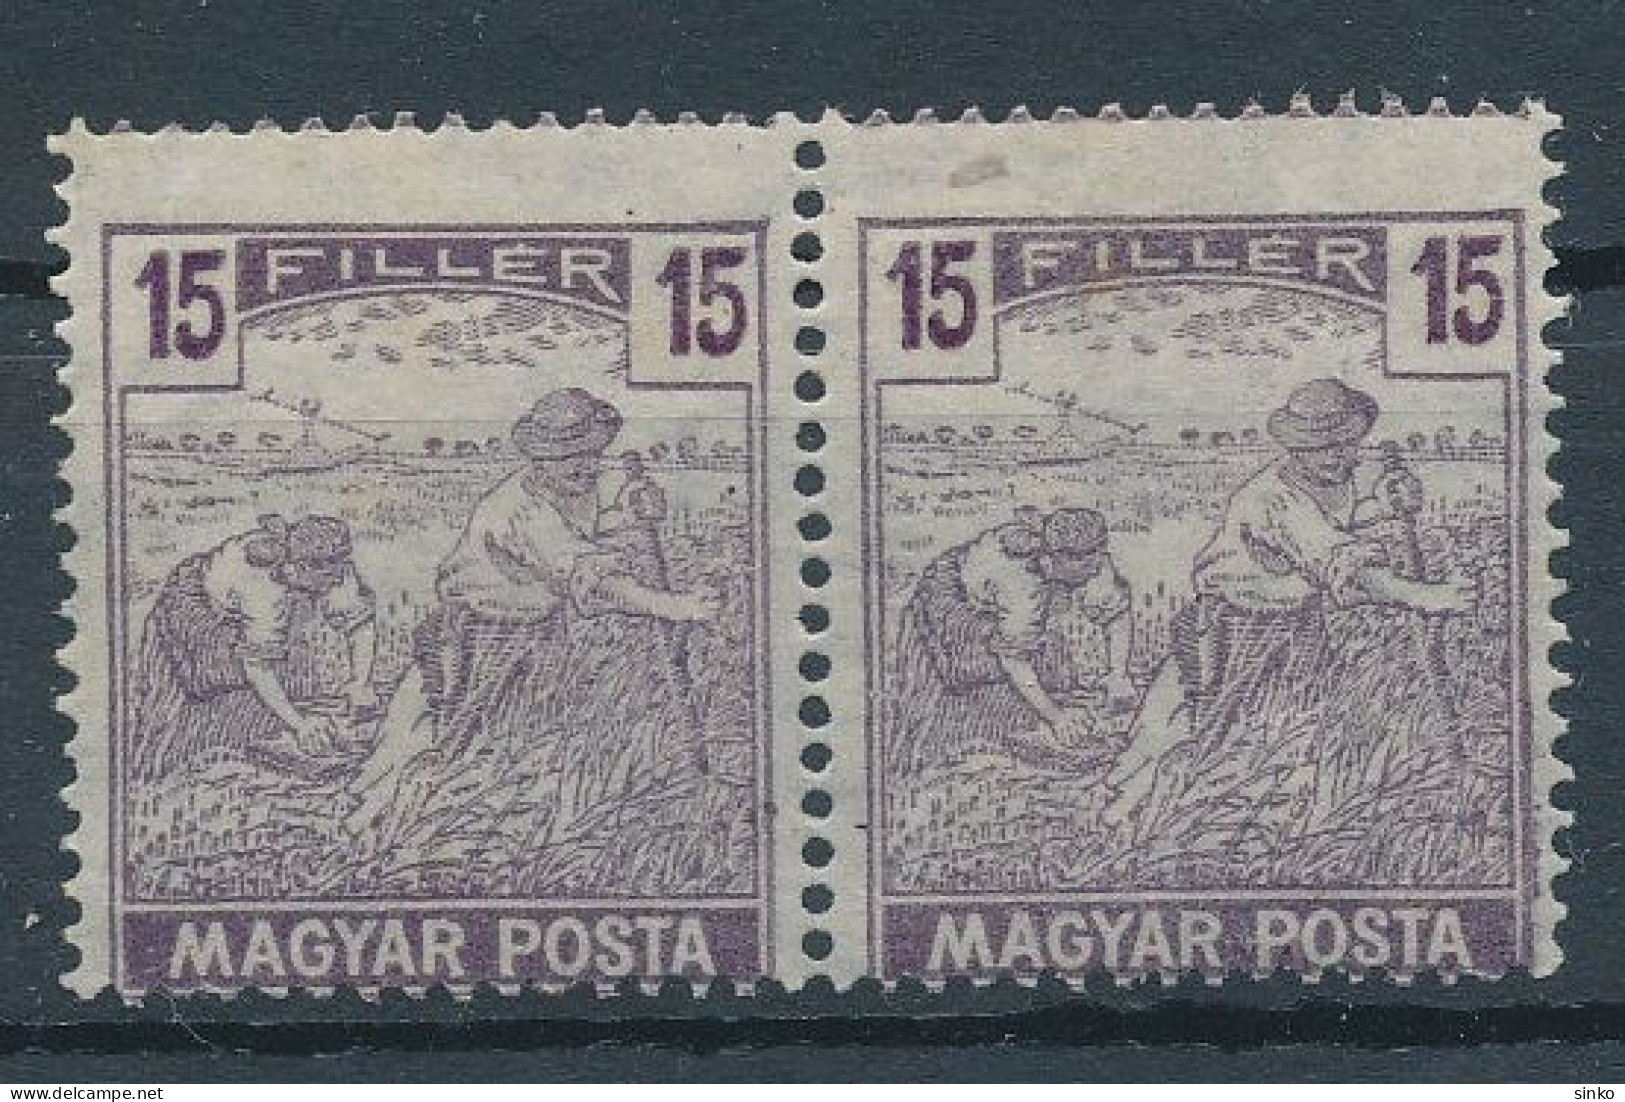 1919. Hungarian Post Office - Misprint - Variedades Y Curiosidades